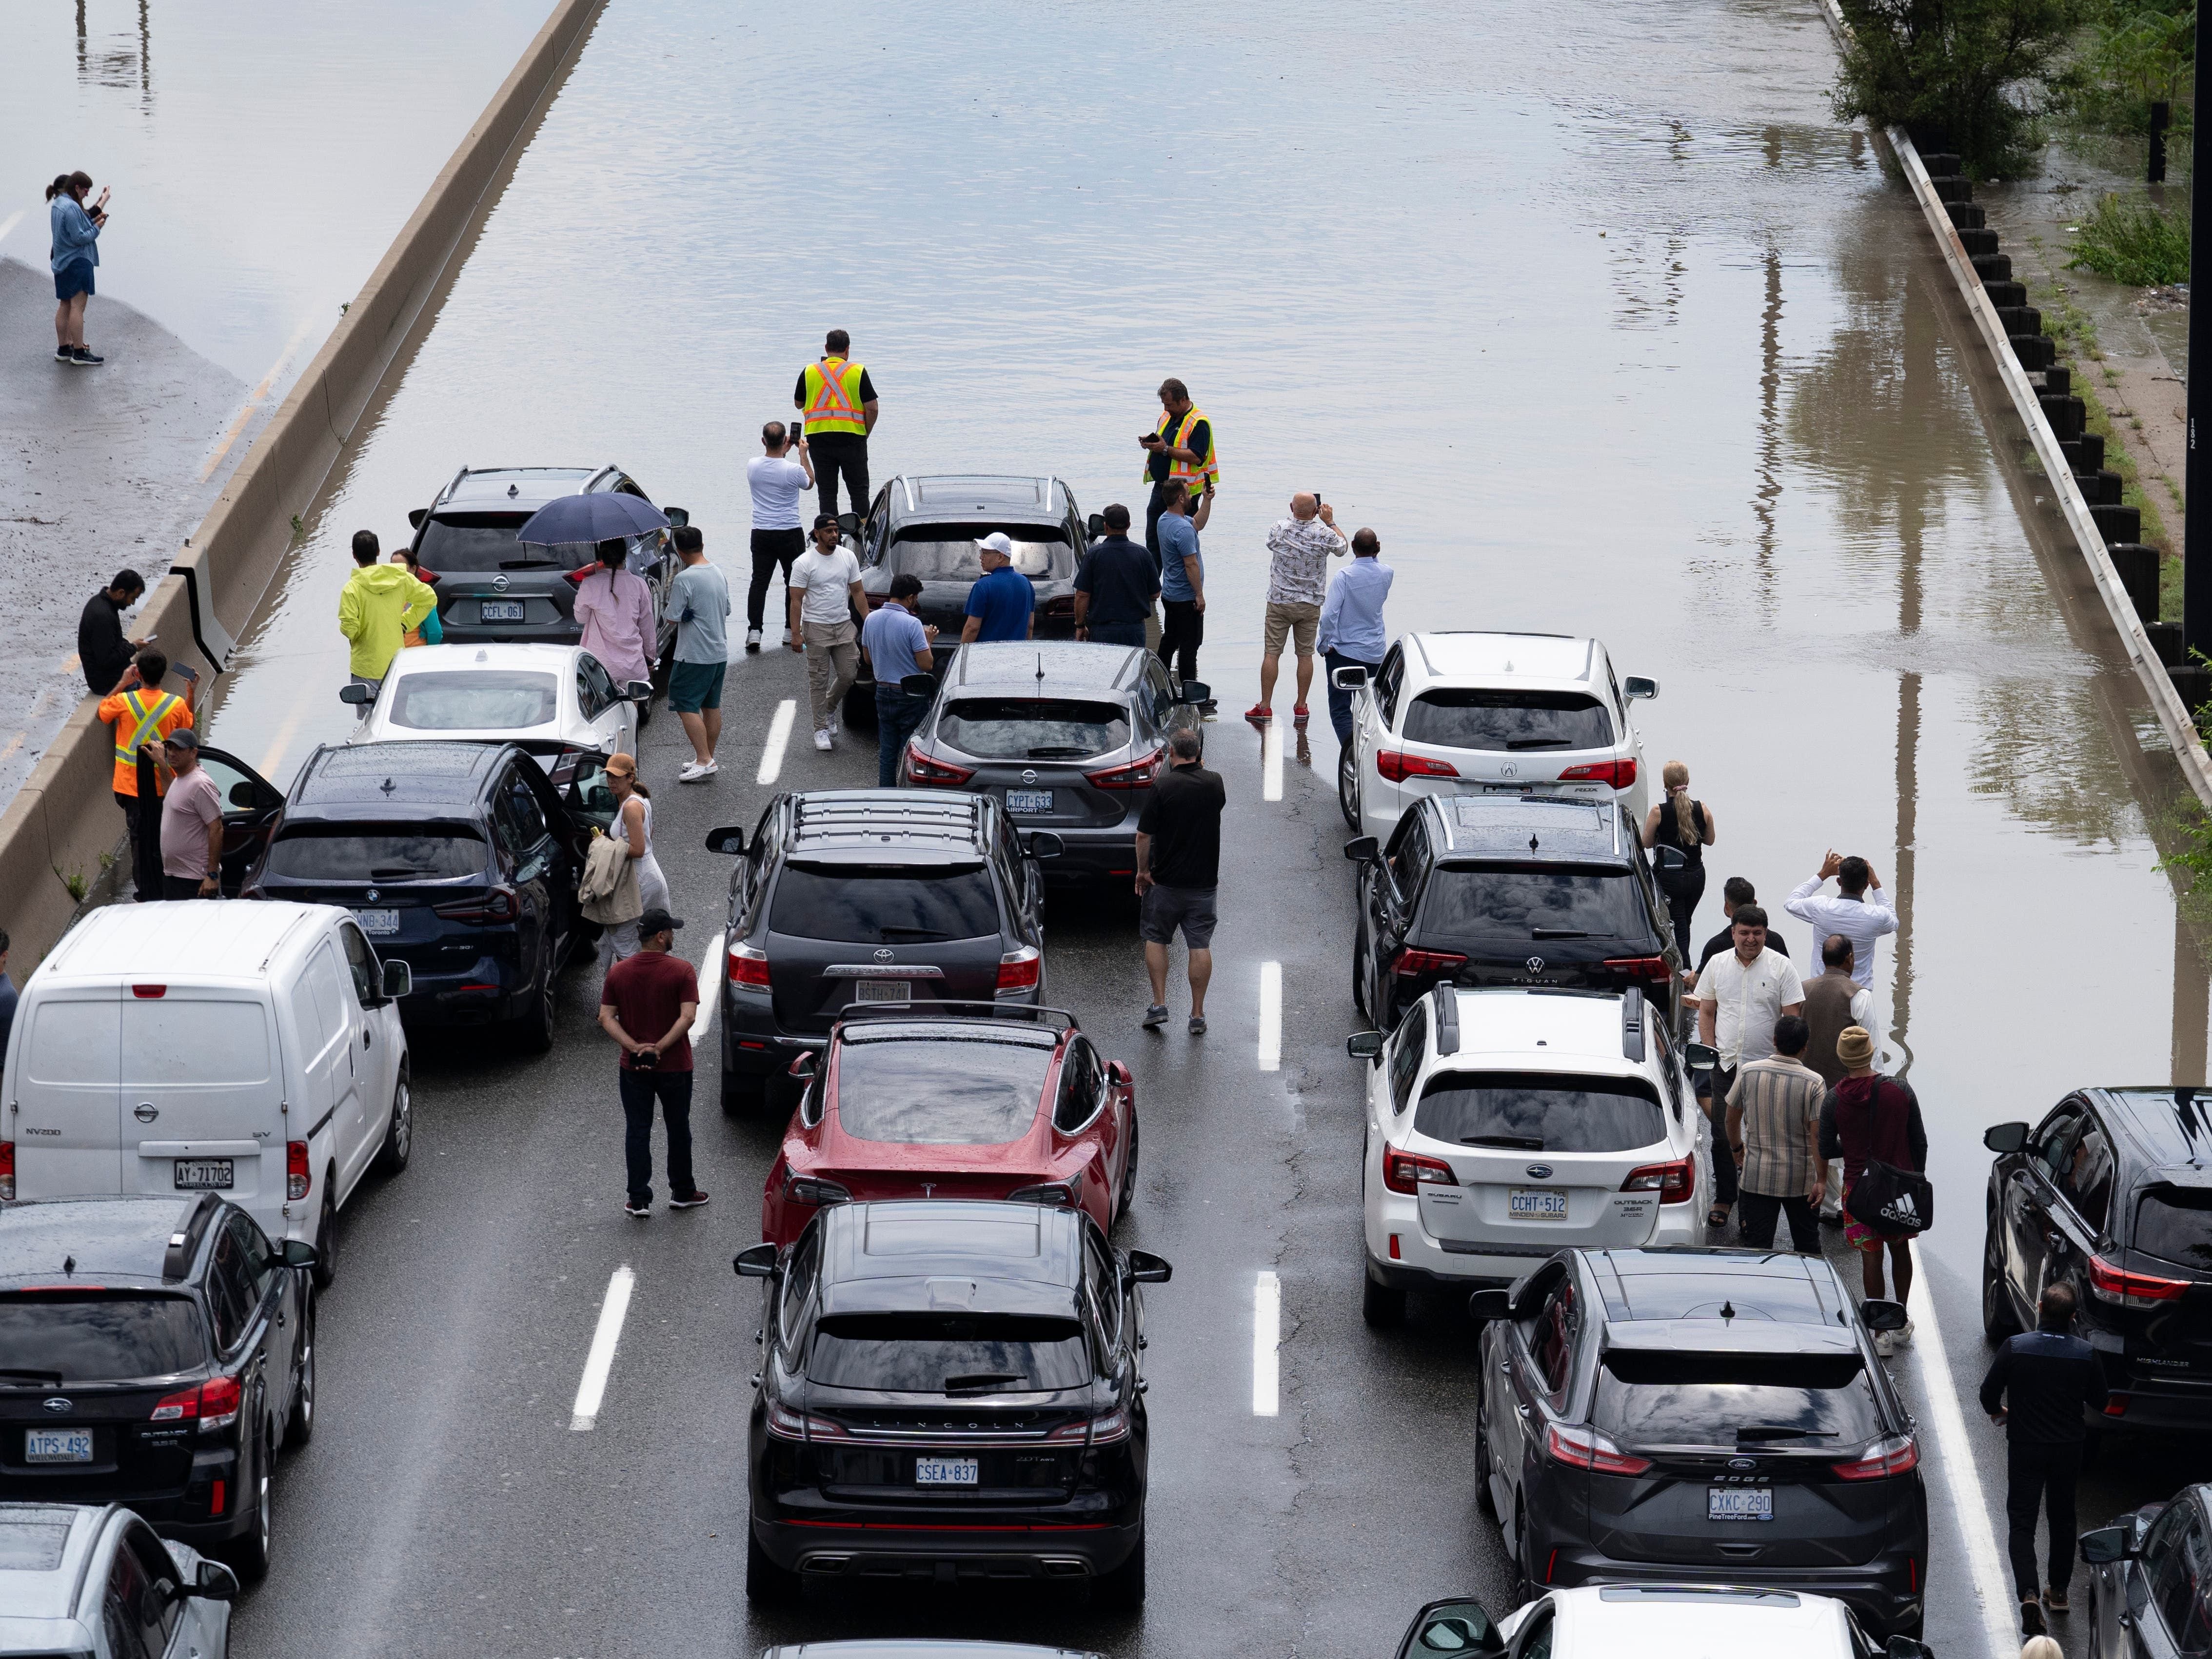 Major road among those flooded as torrential rain hits Toronto